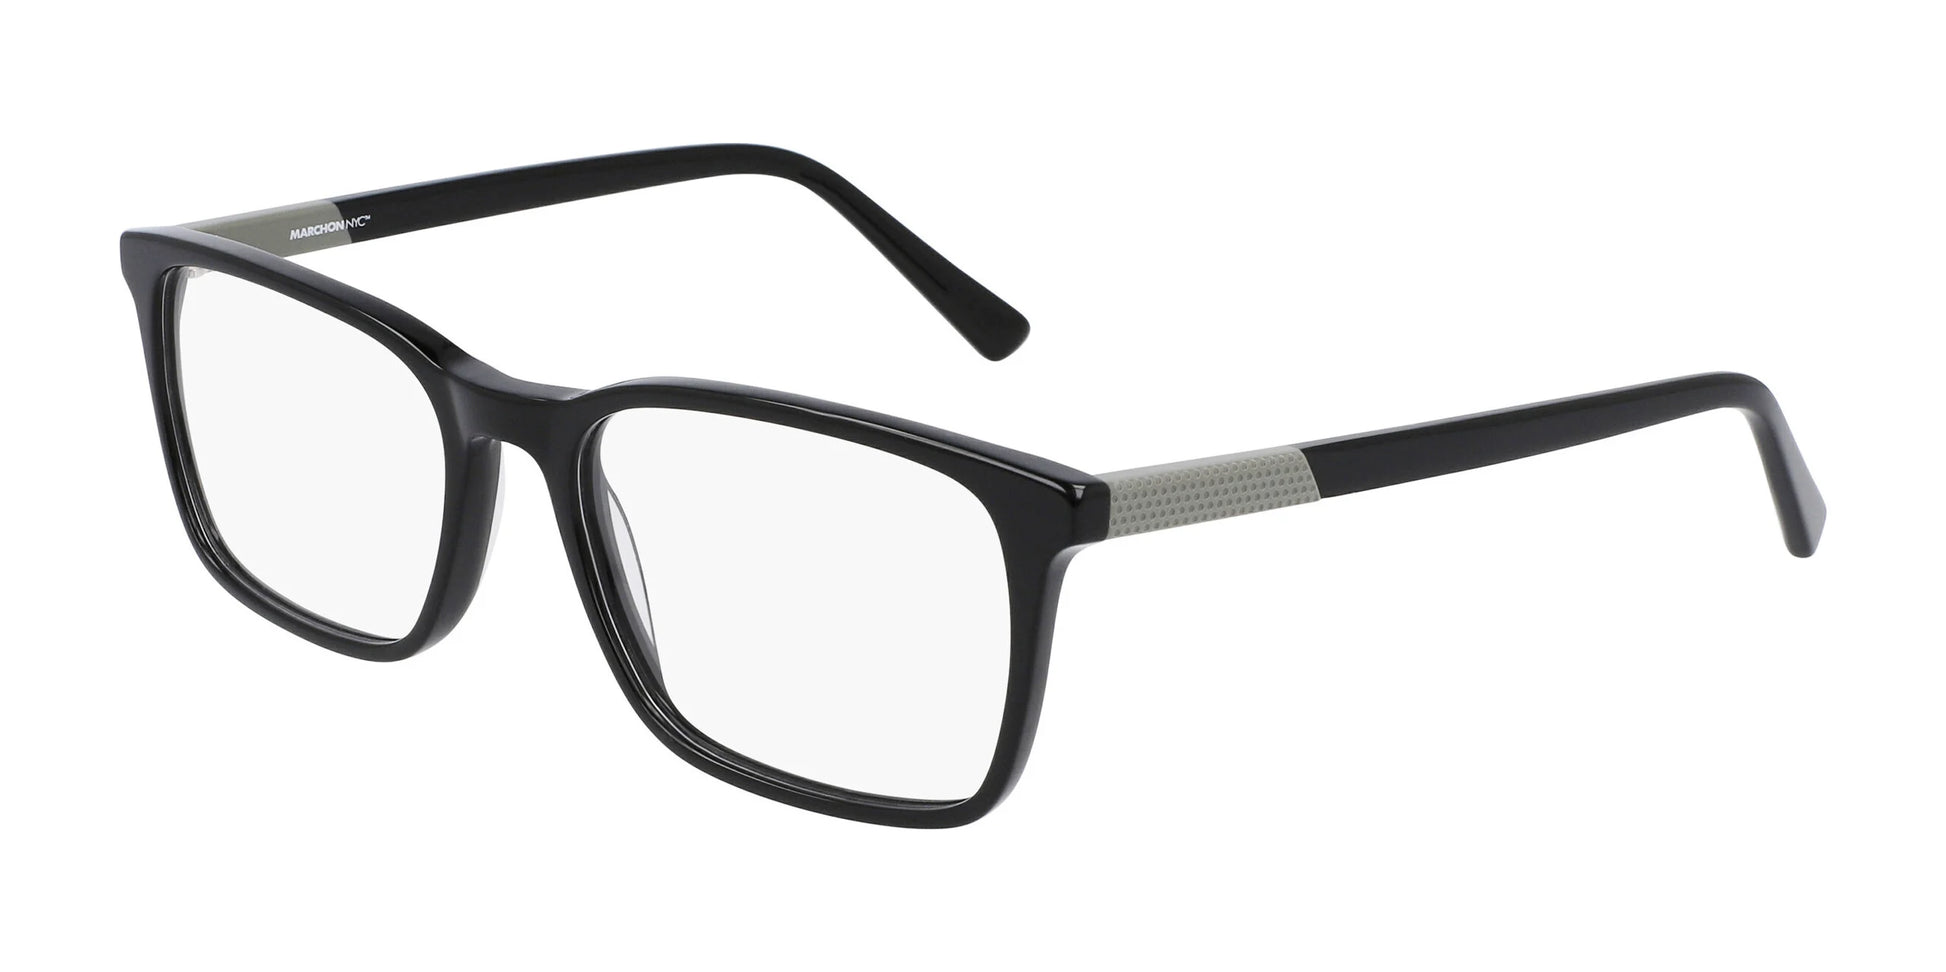 Marchon NYC 3012 Eyeglasses Black